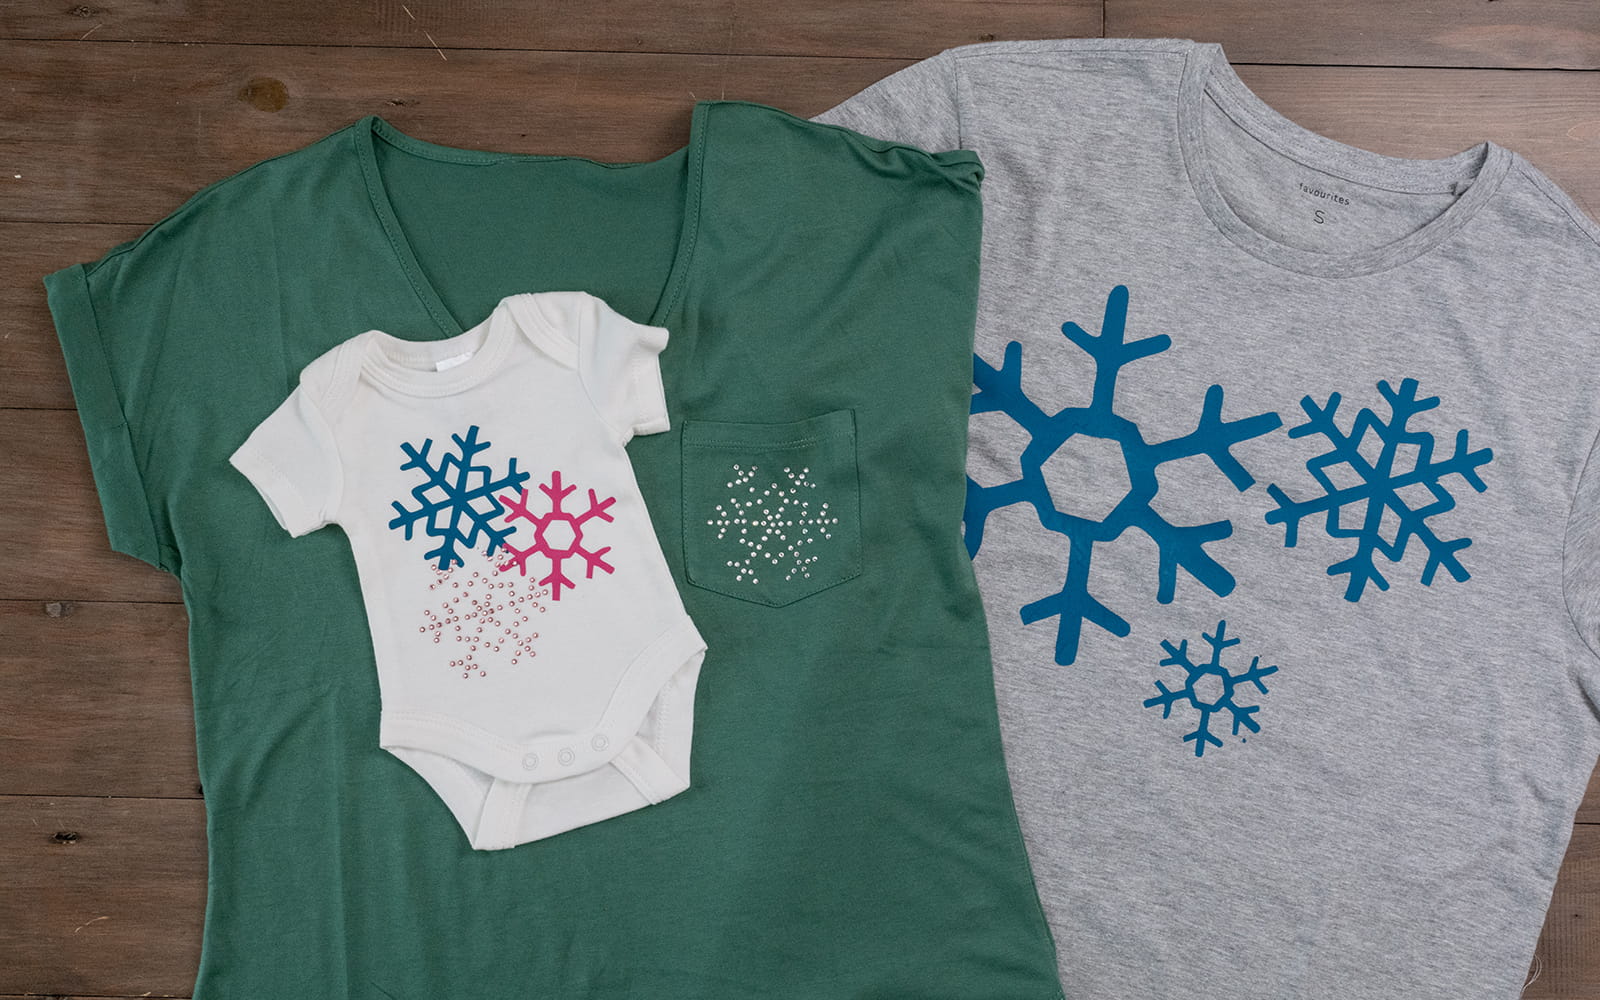 Three t-shirts with snowflake motifs